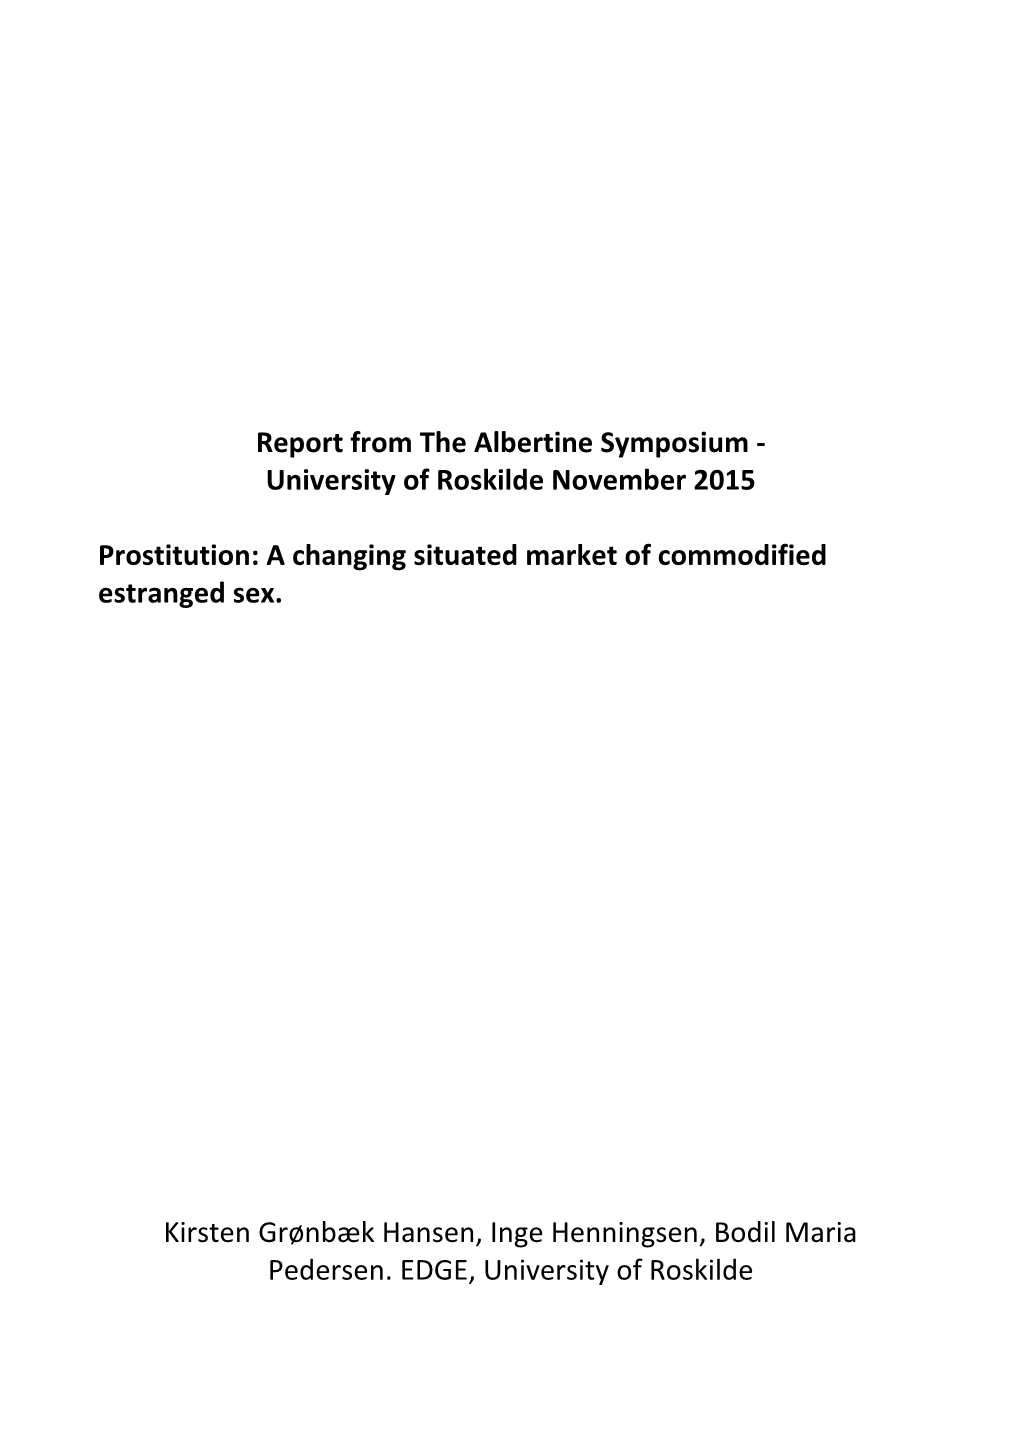 Report from the Albertine Symposium